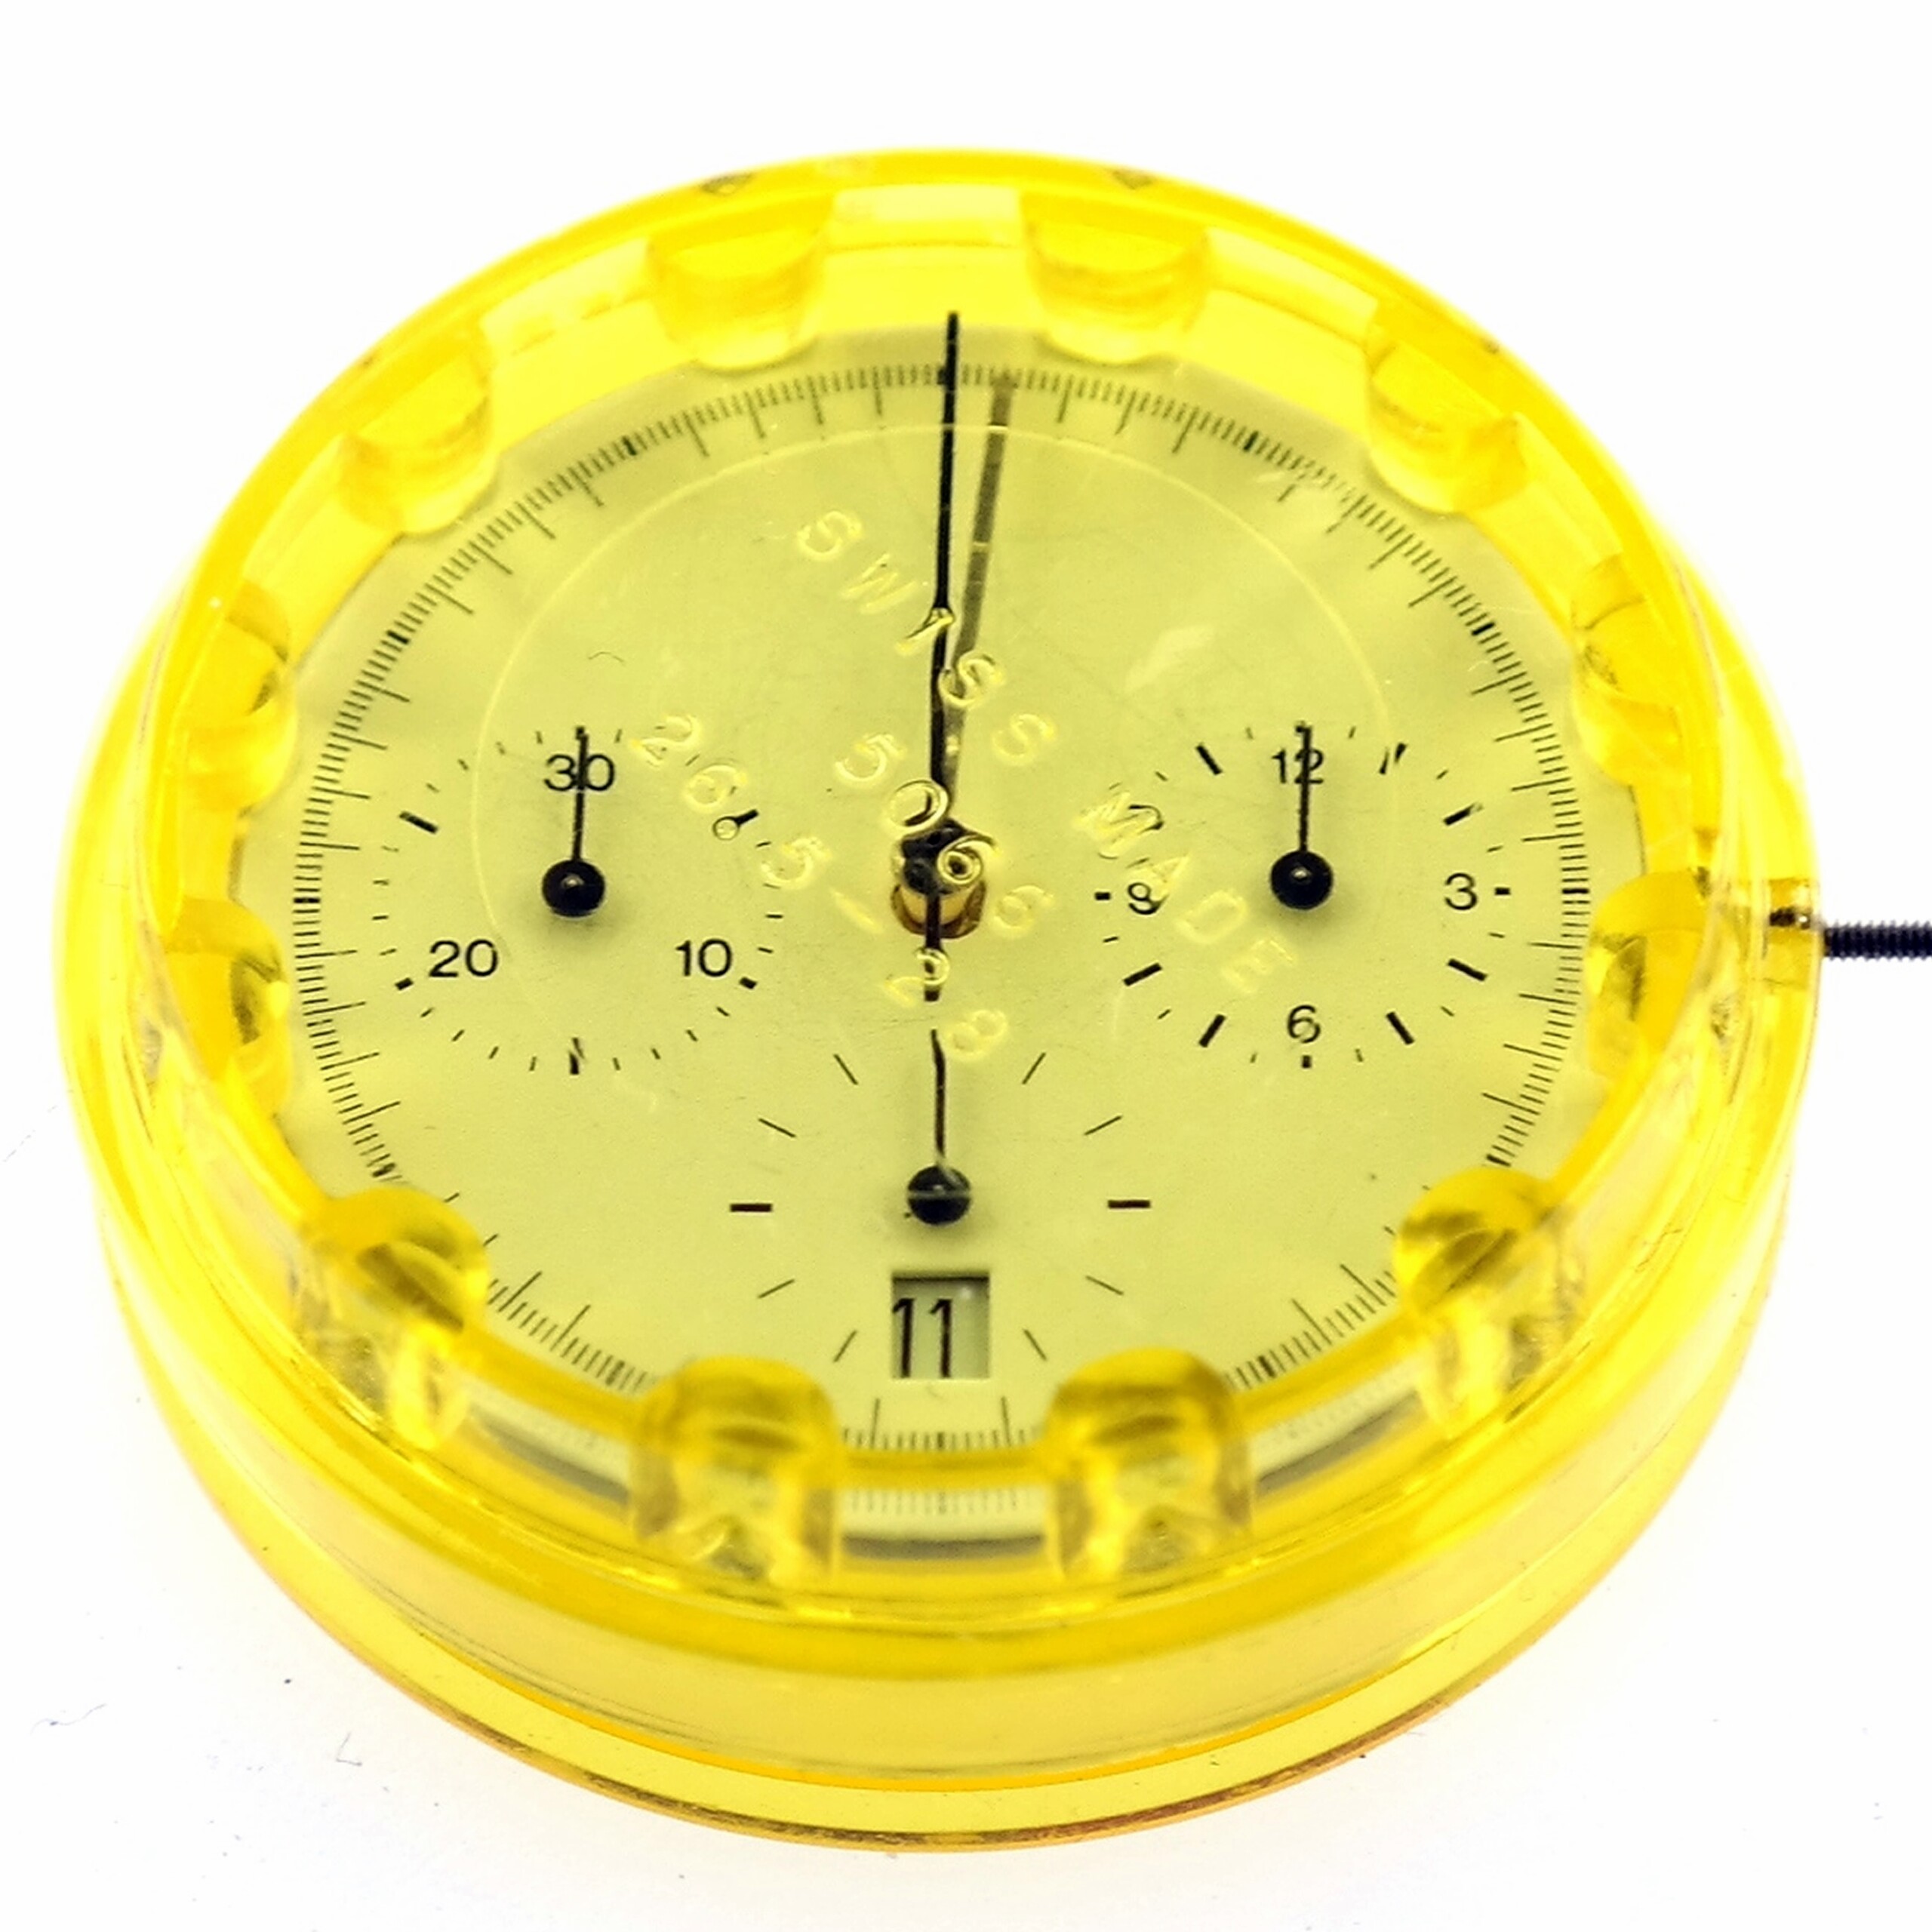 DANIEL ROTH Caliber 1270 - Meca-Quartz Chronograph Watch Movement